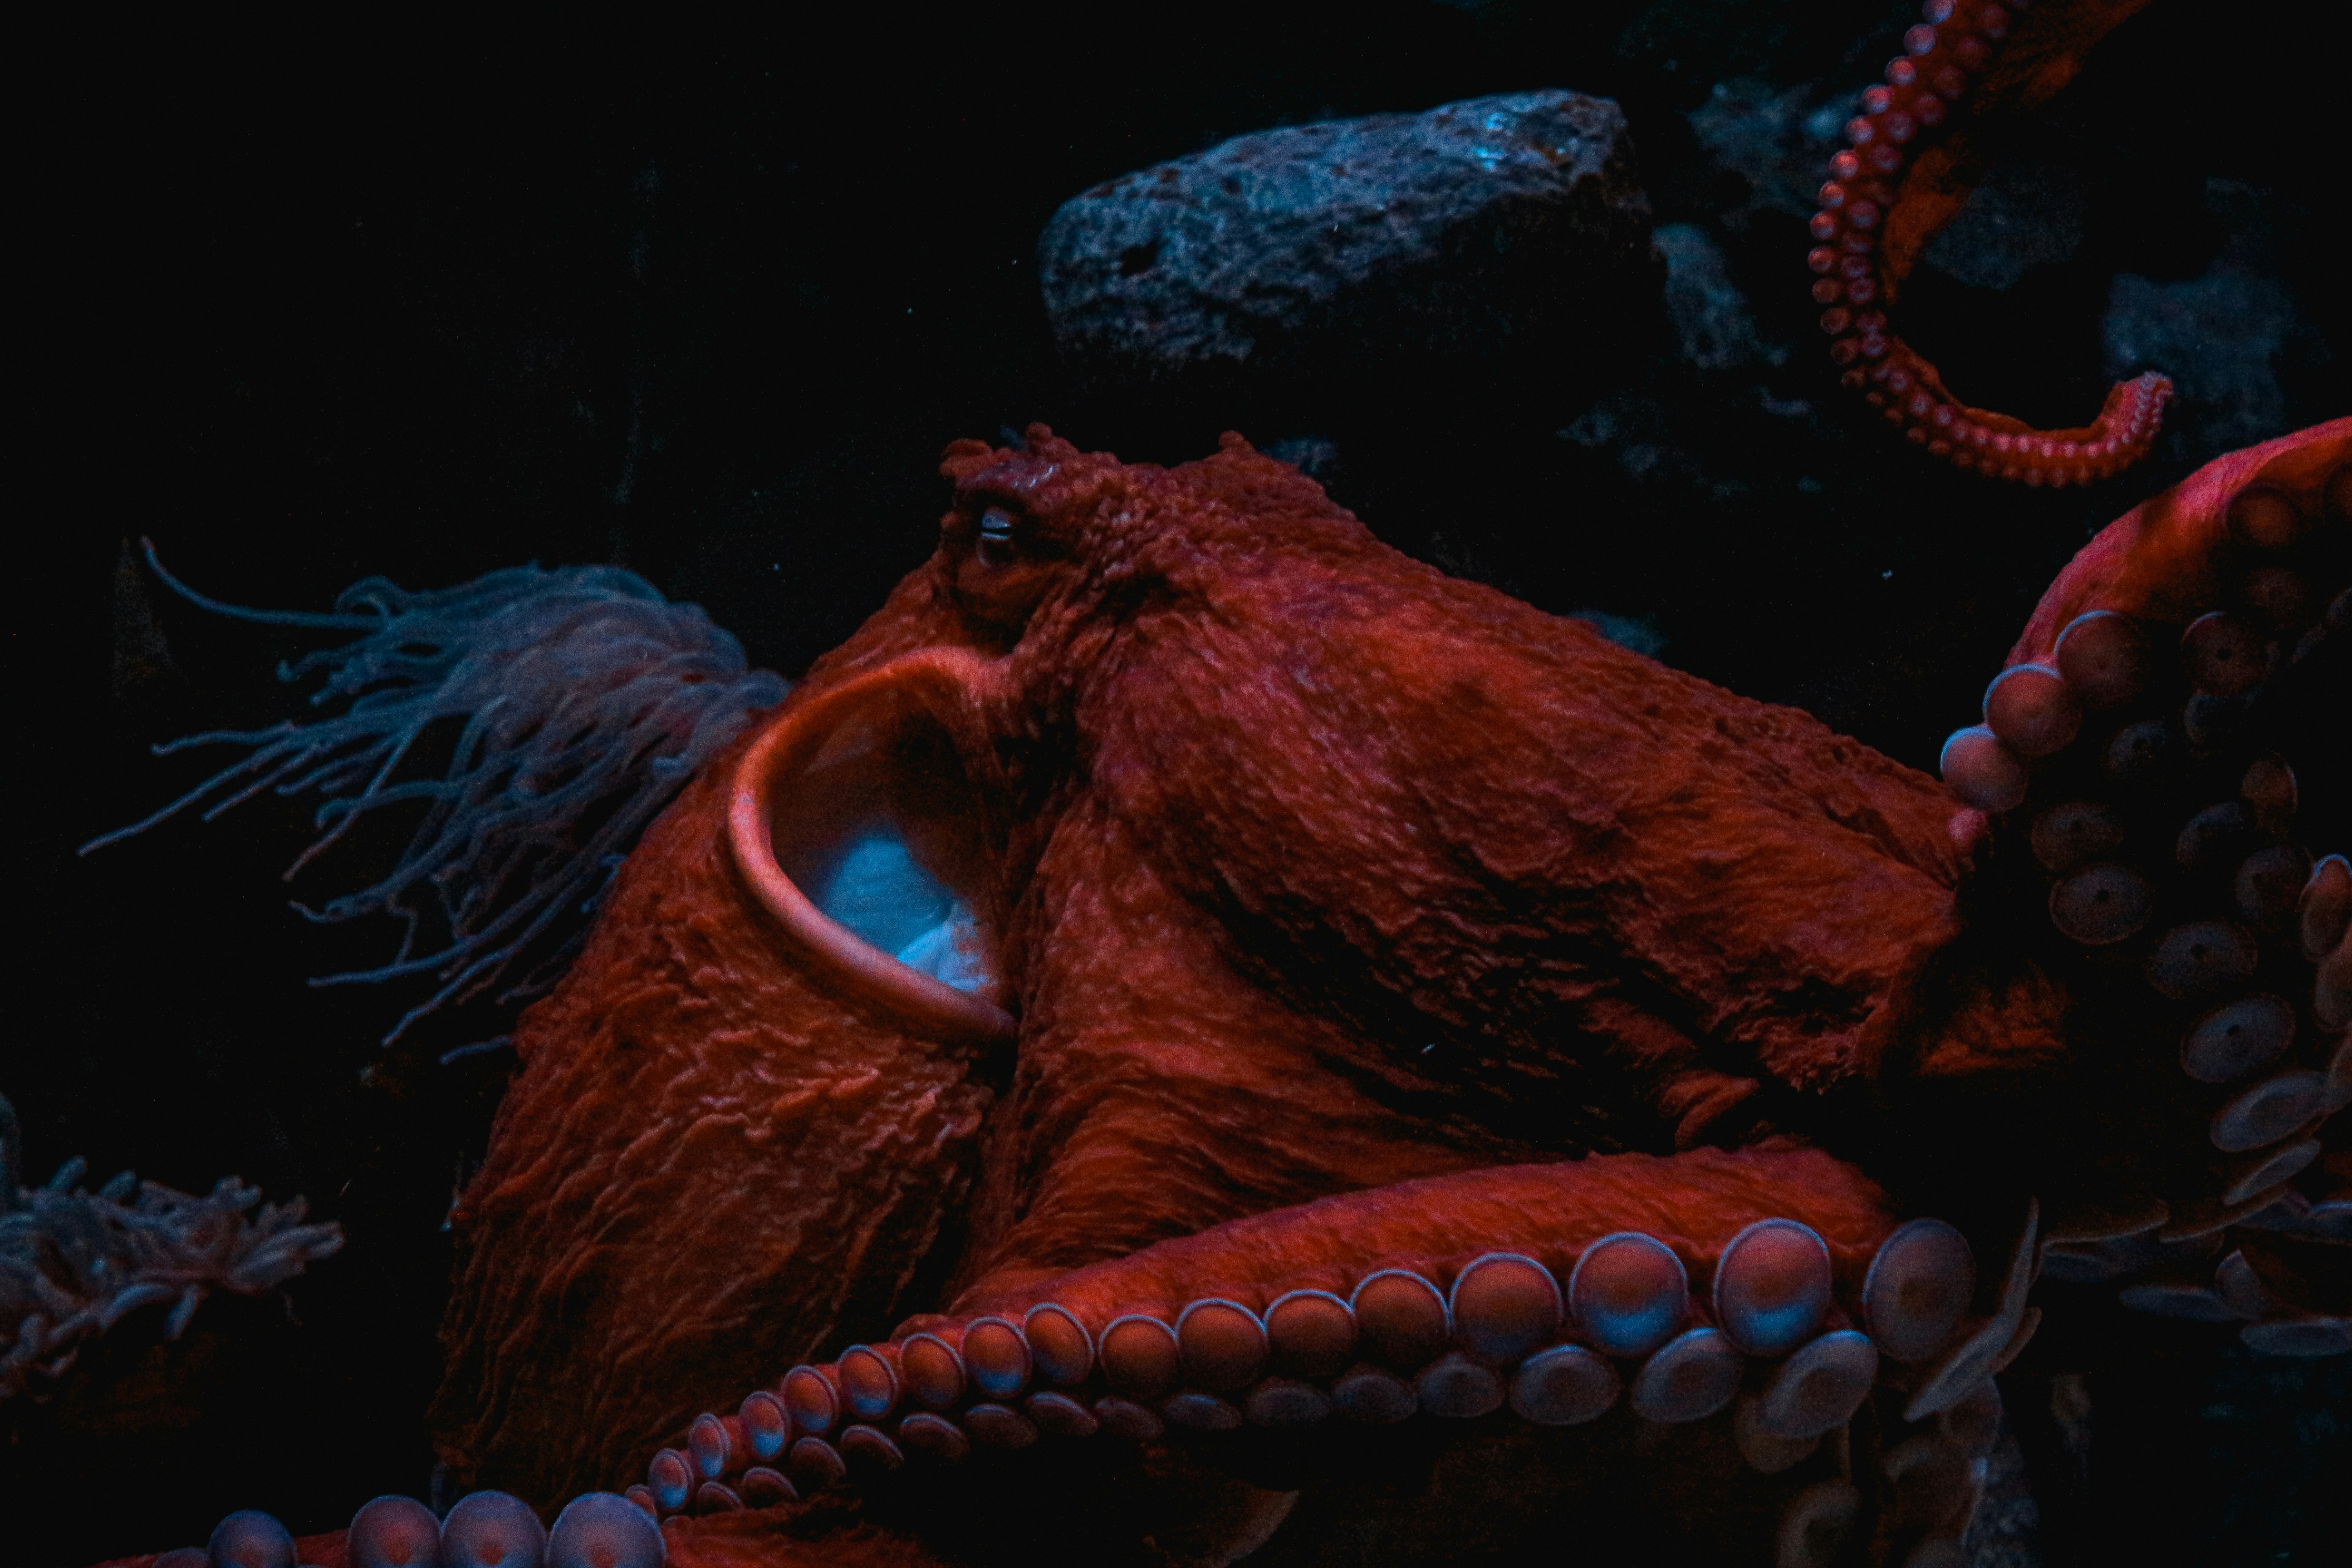 Giant red octopus in dark waters